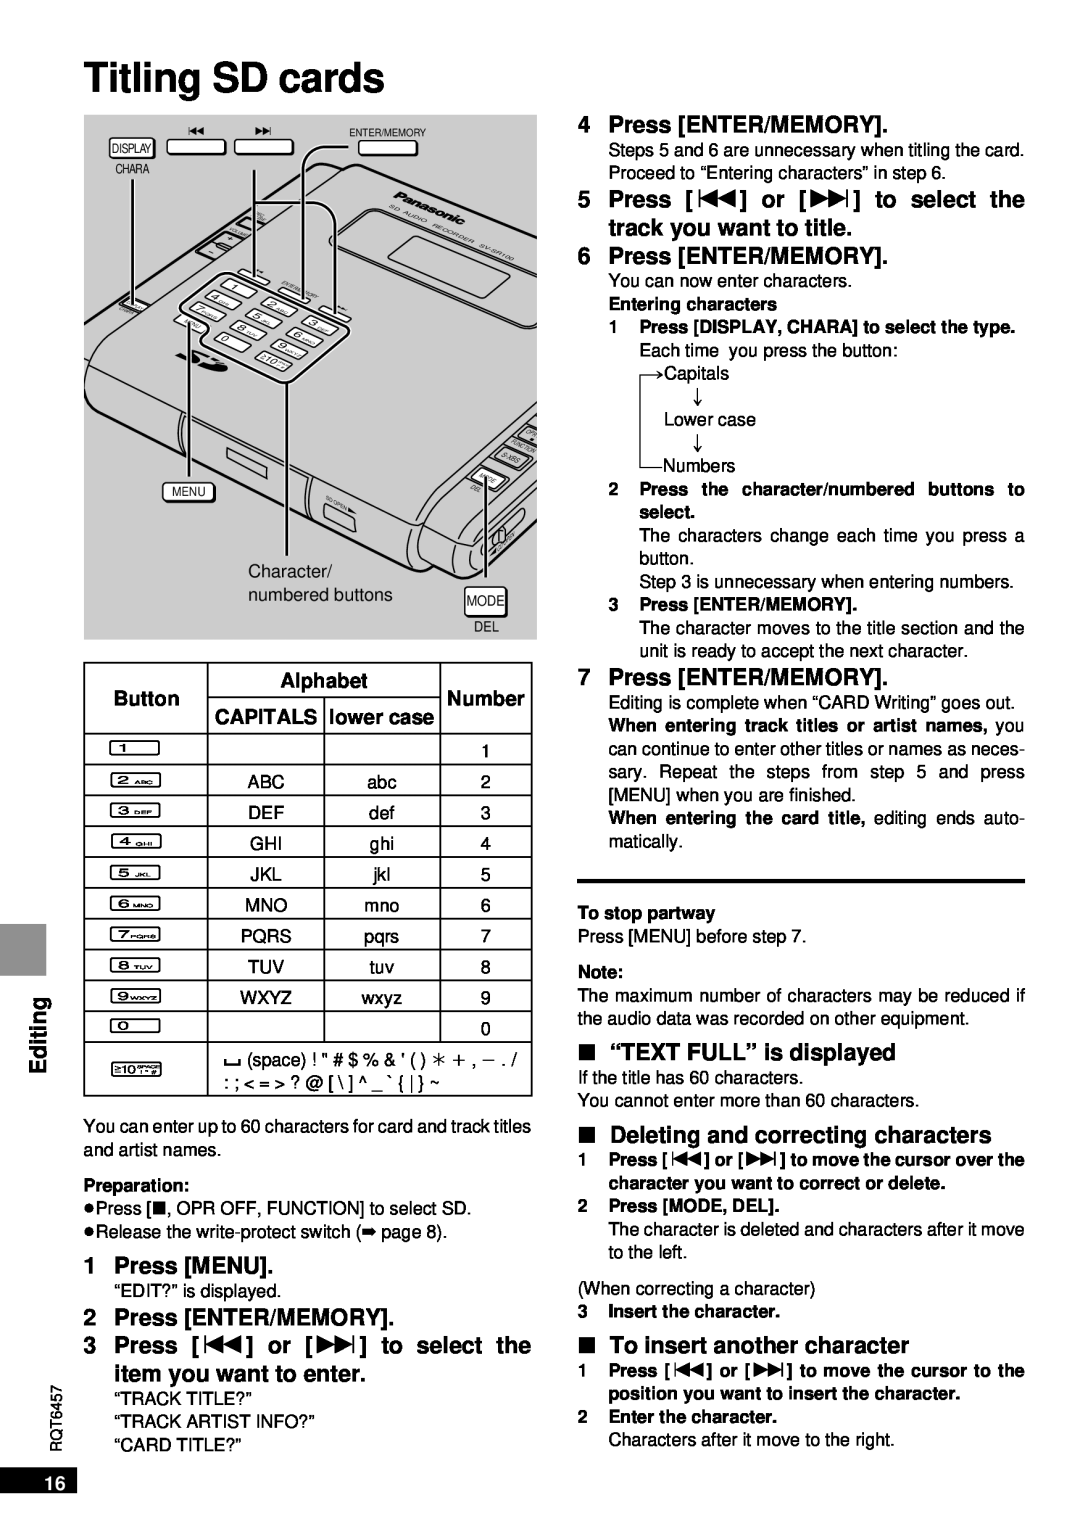 Panasonic SV-SR100 operating instructions Titling SD cards 